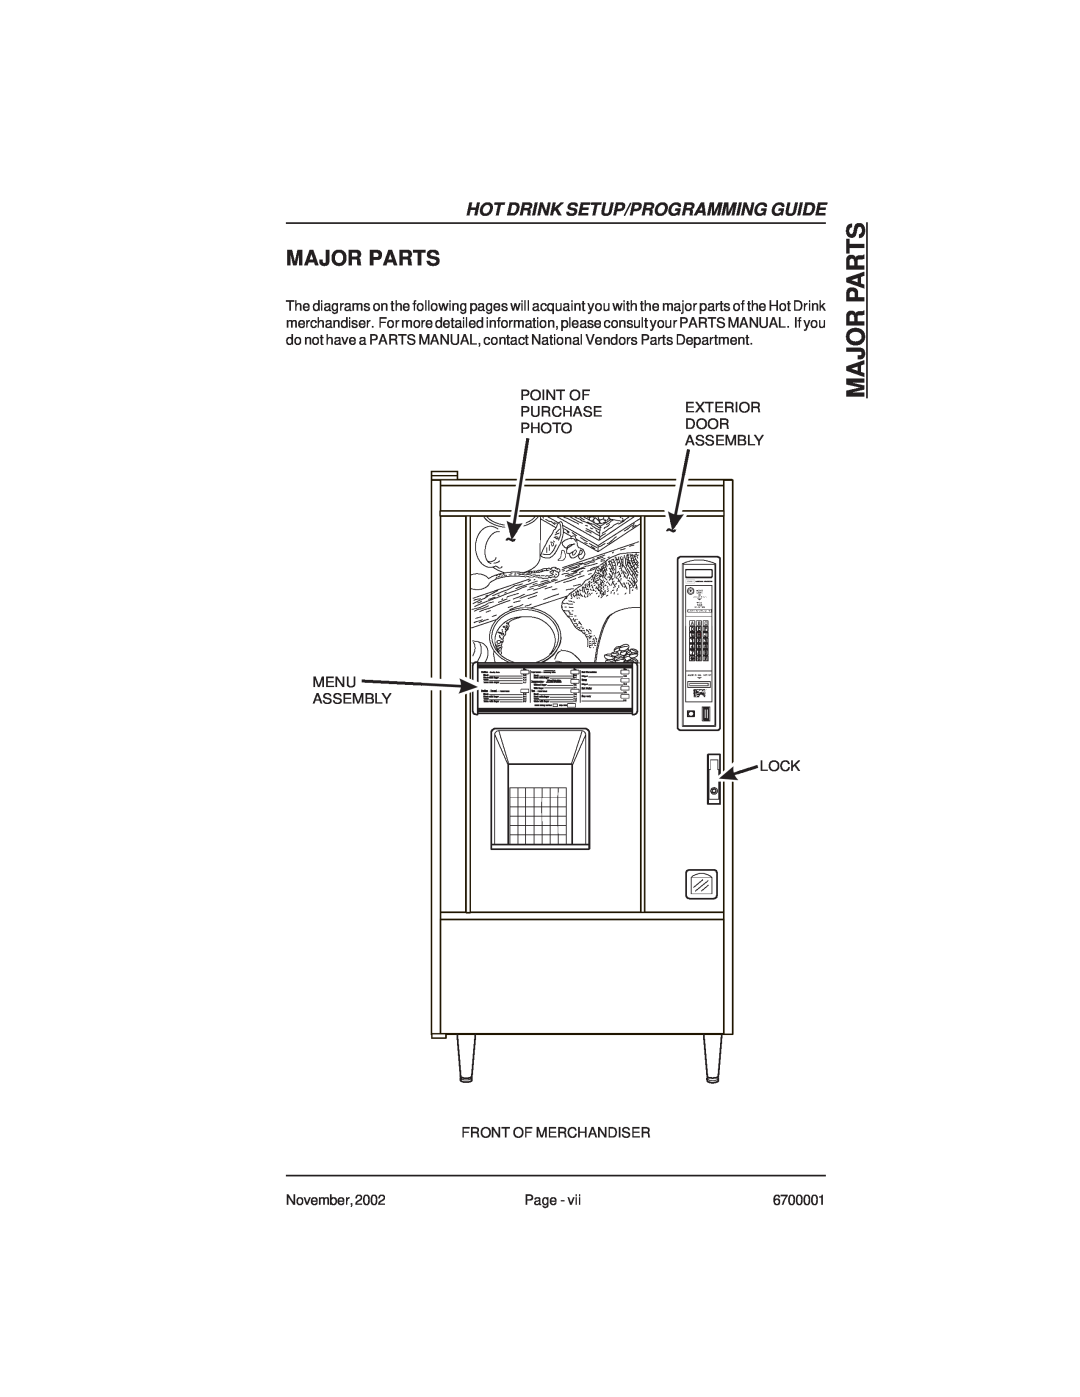 Crane Merchandising Systems 678, 670 manual Major Parts, Hot Drink Setup/Programming Guide 